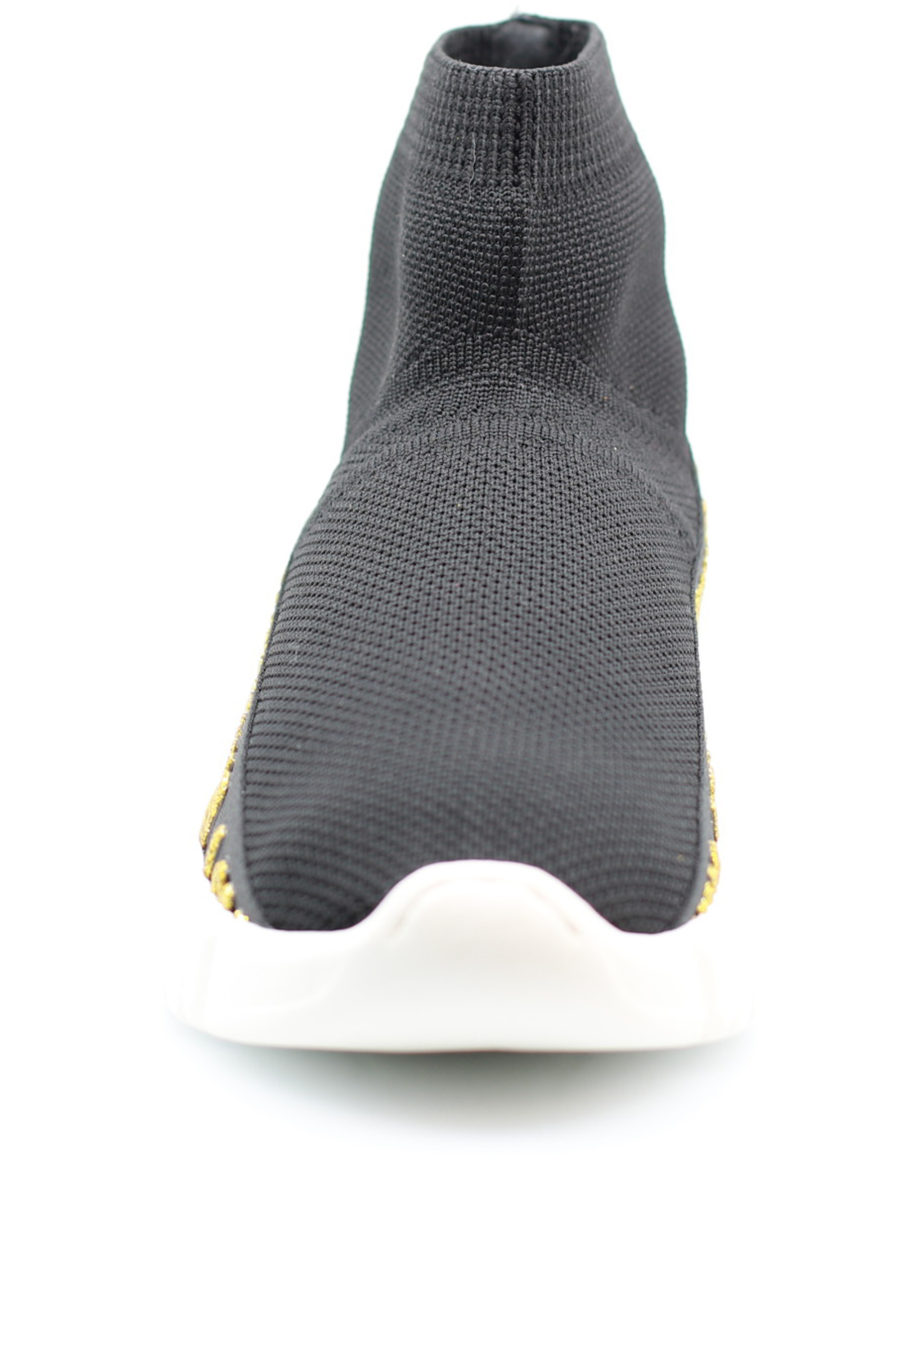 Zapatillas altas de color negro con logo dorado - 4793f1834fd8c0044d729b00d9b8f3caad72e76b